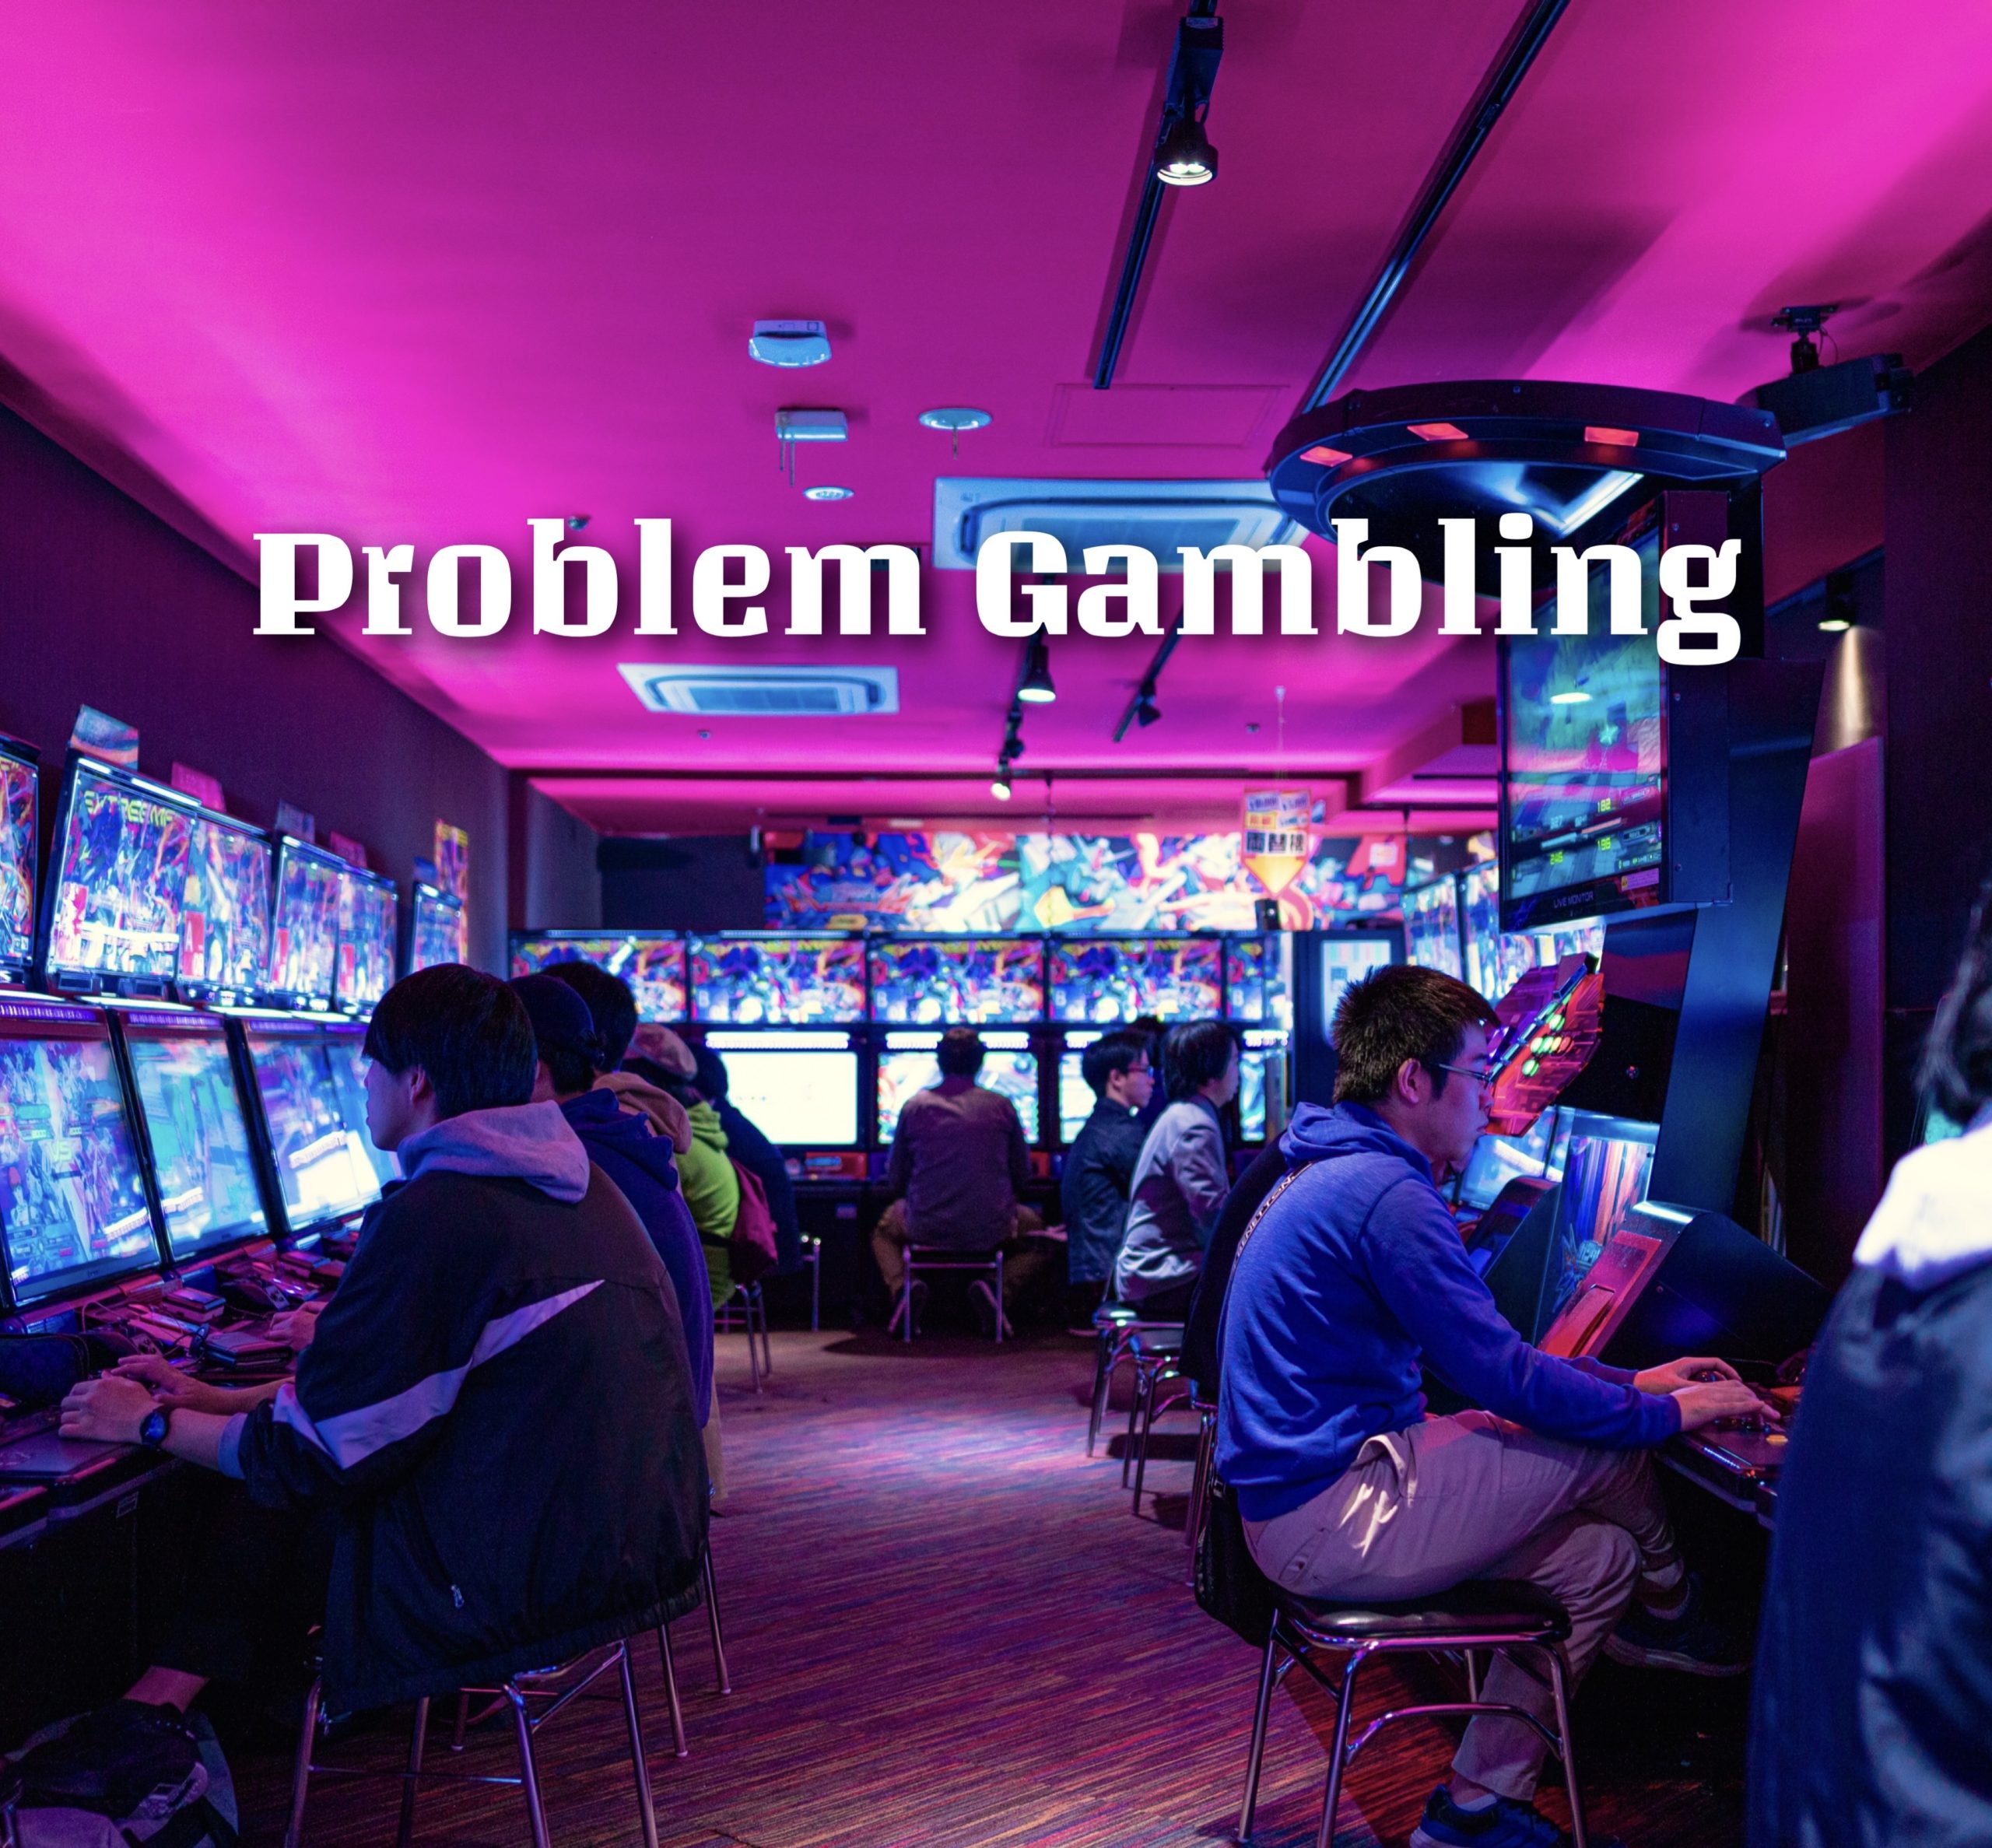 Problem Gambling